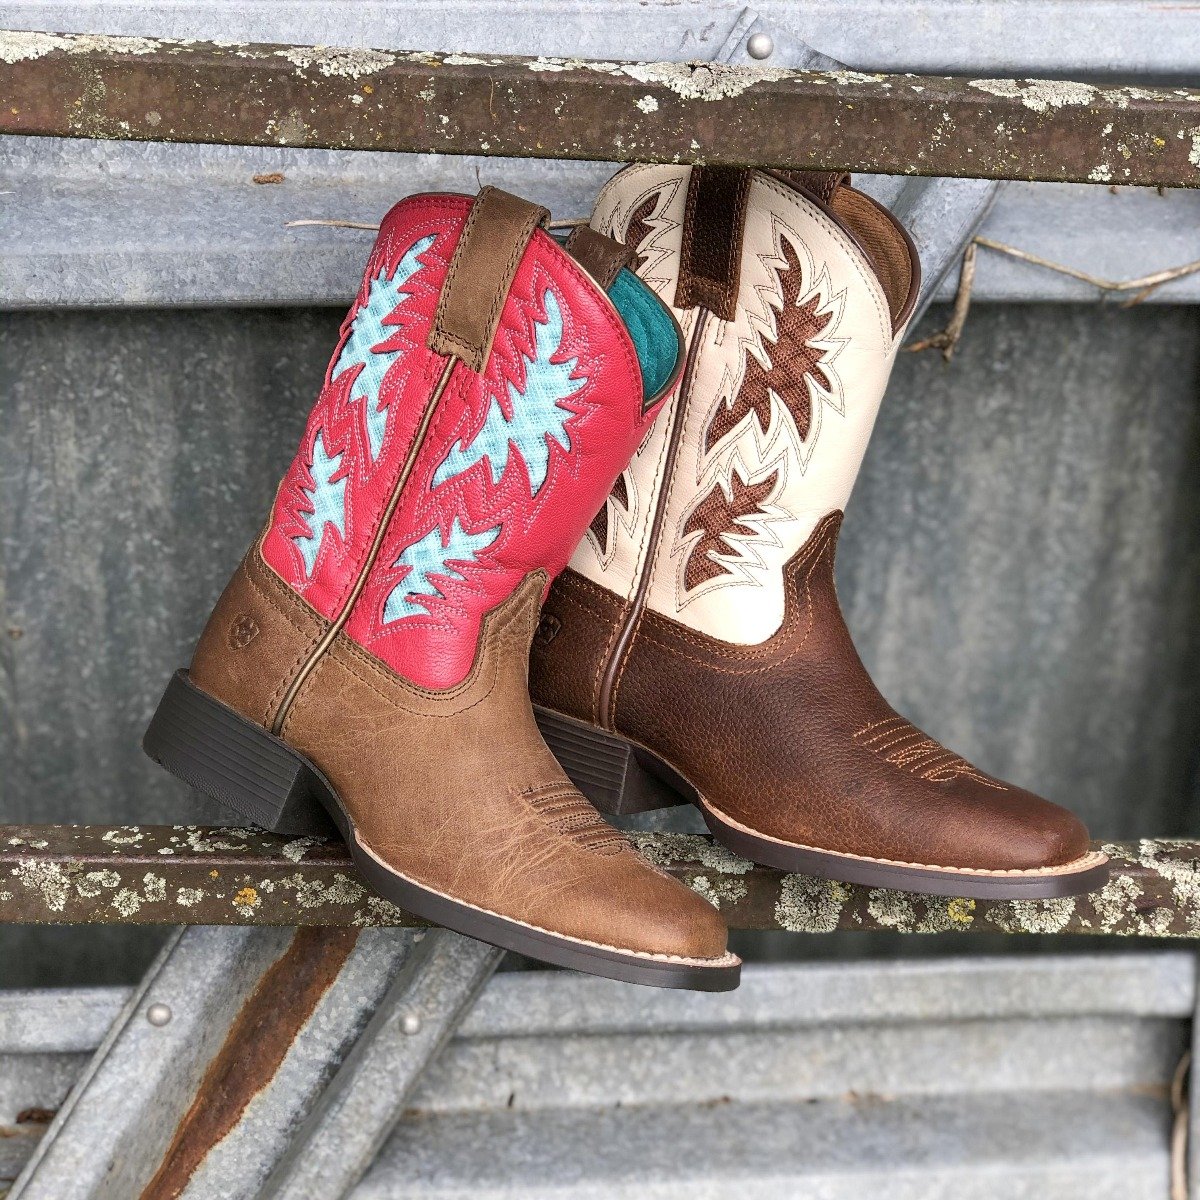 Kids' Cowboy Boots